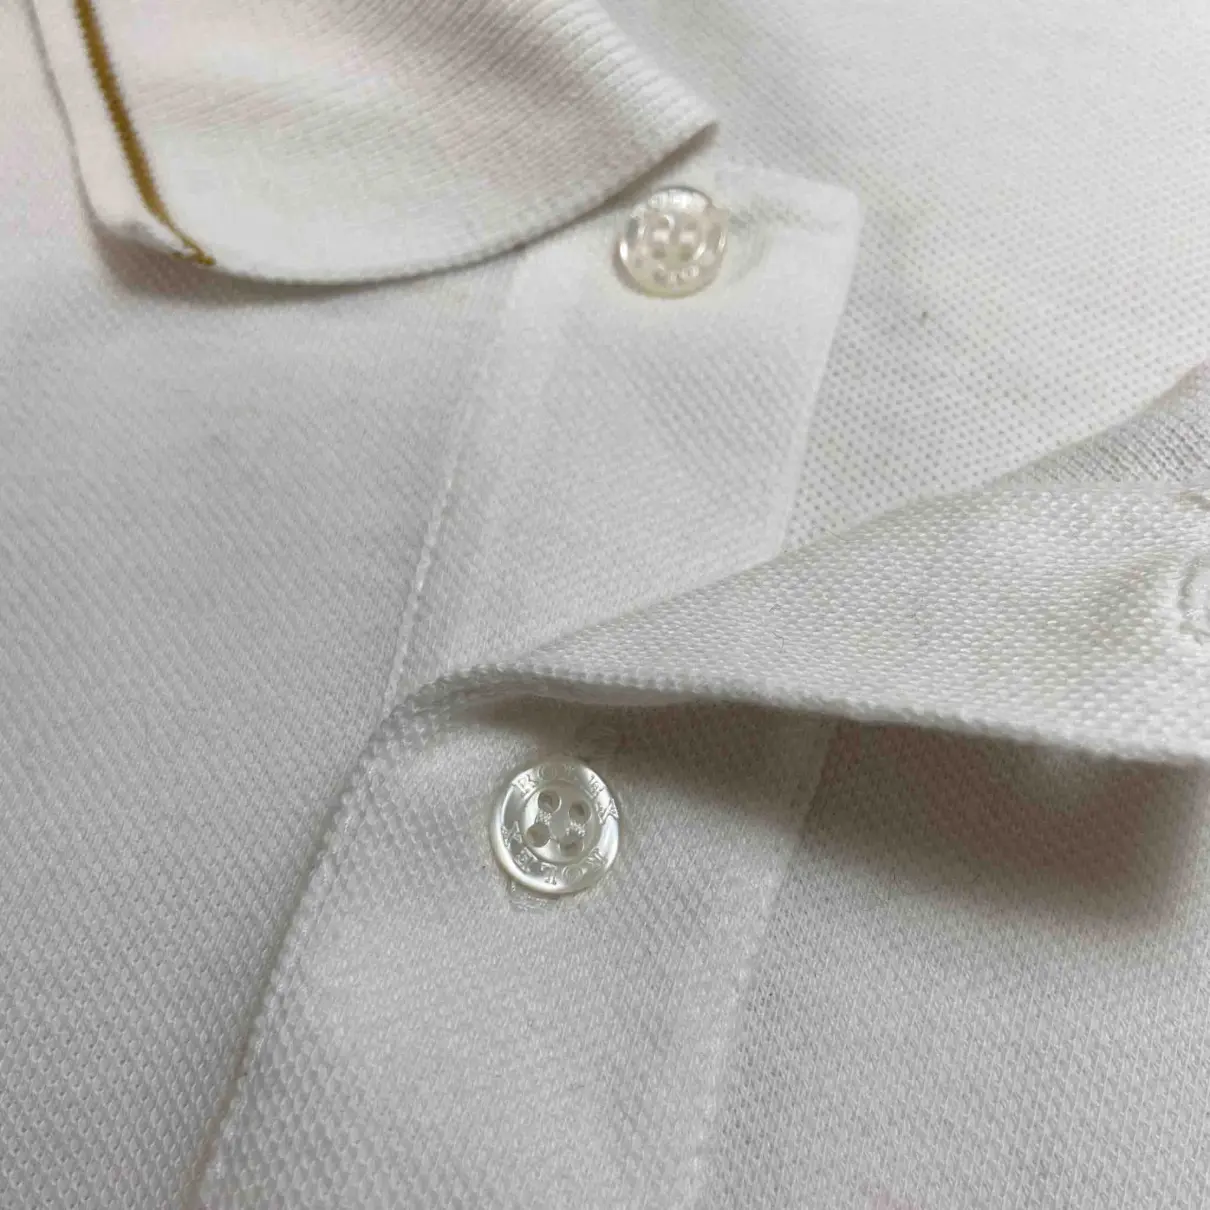 Polo shirt Rolex - Vintage